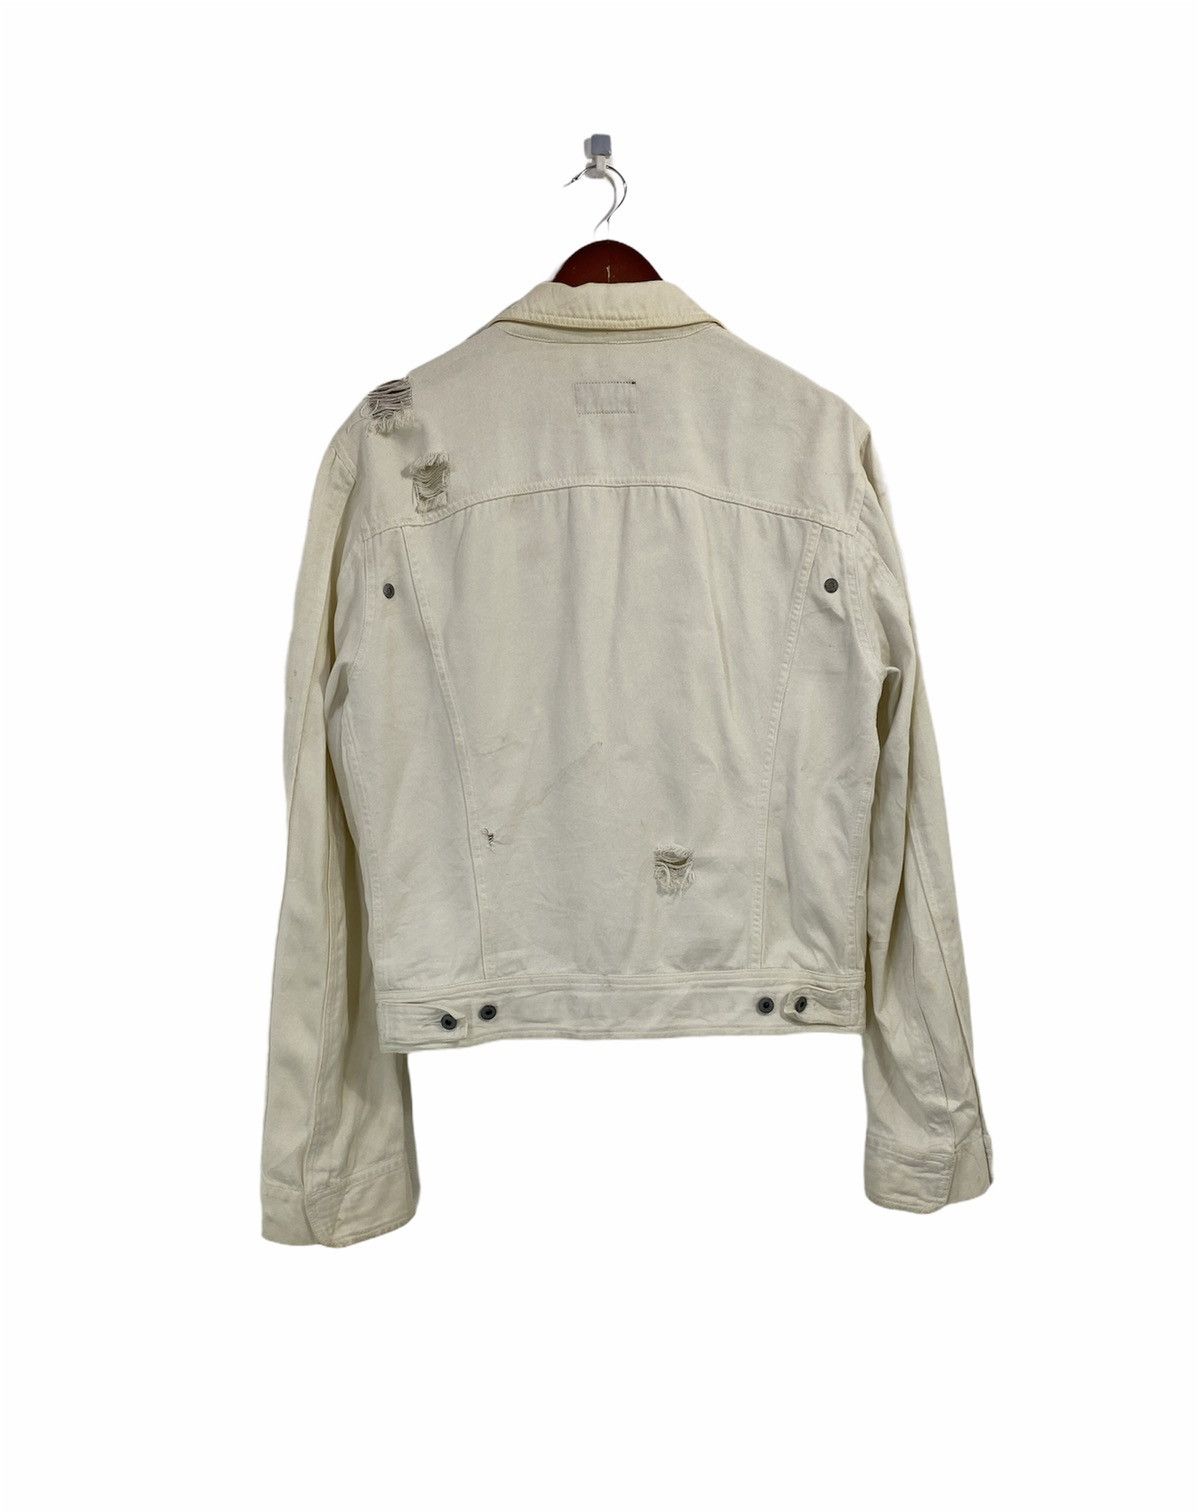 Dolce and Gabbana Cropped Jacket Destressed Denim Jacket - 2